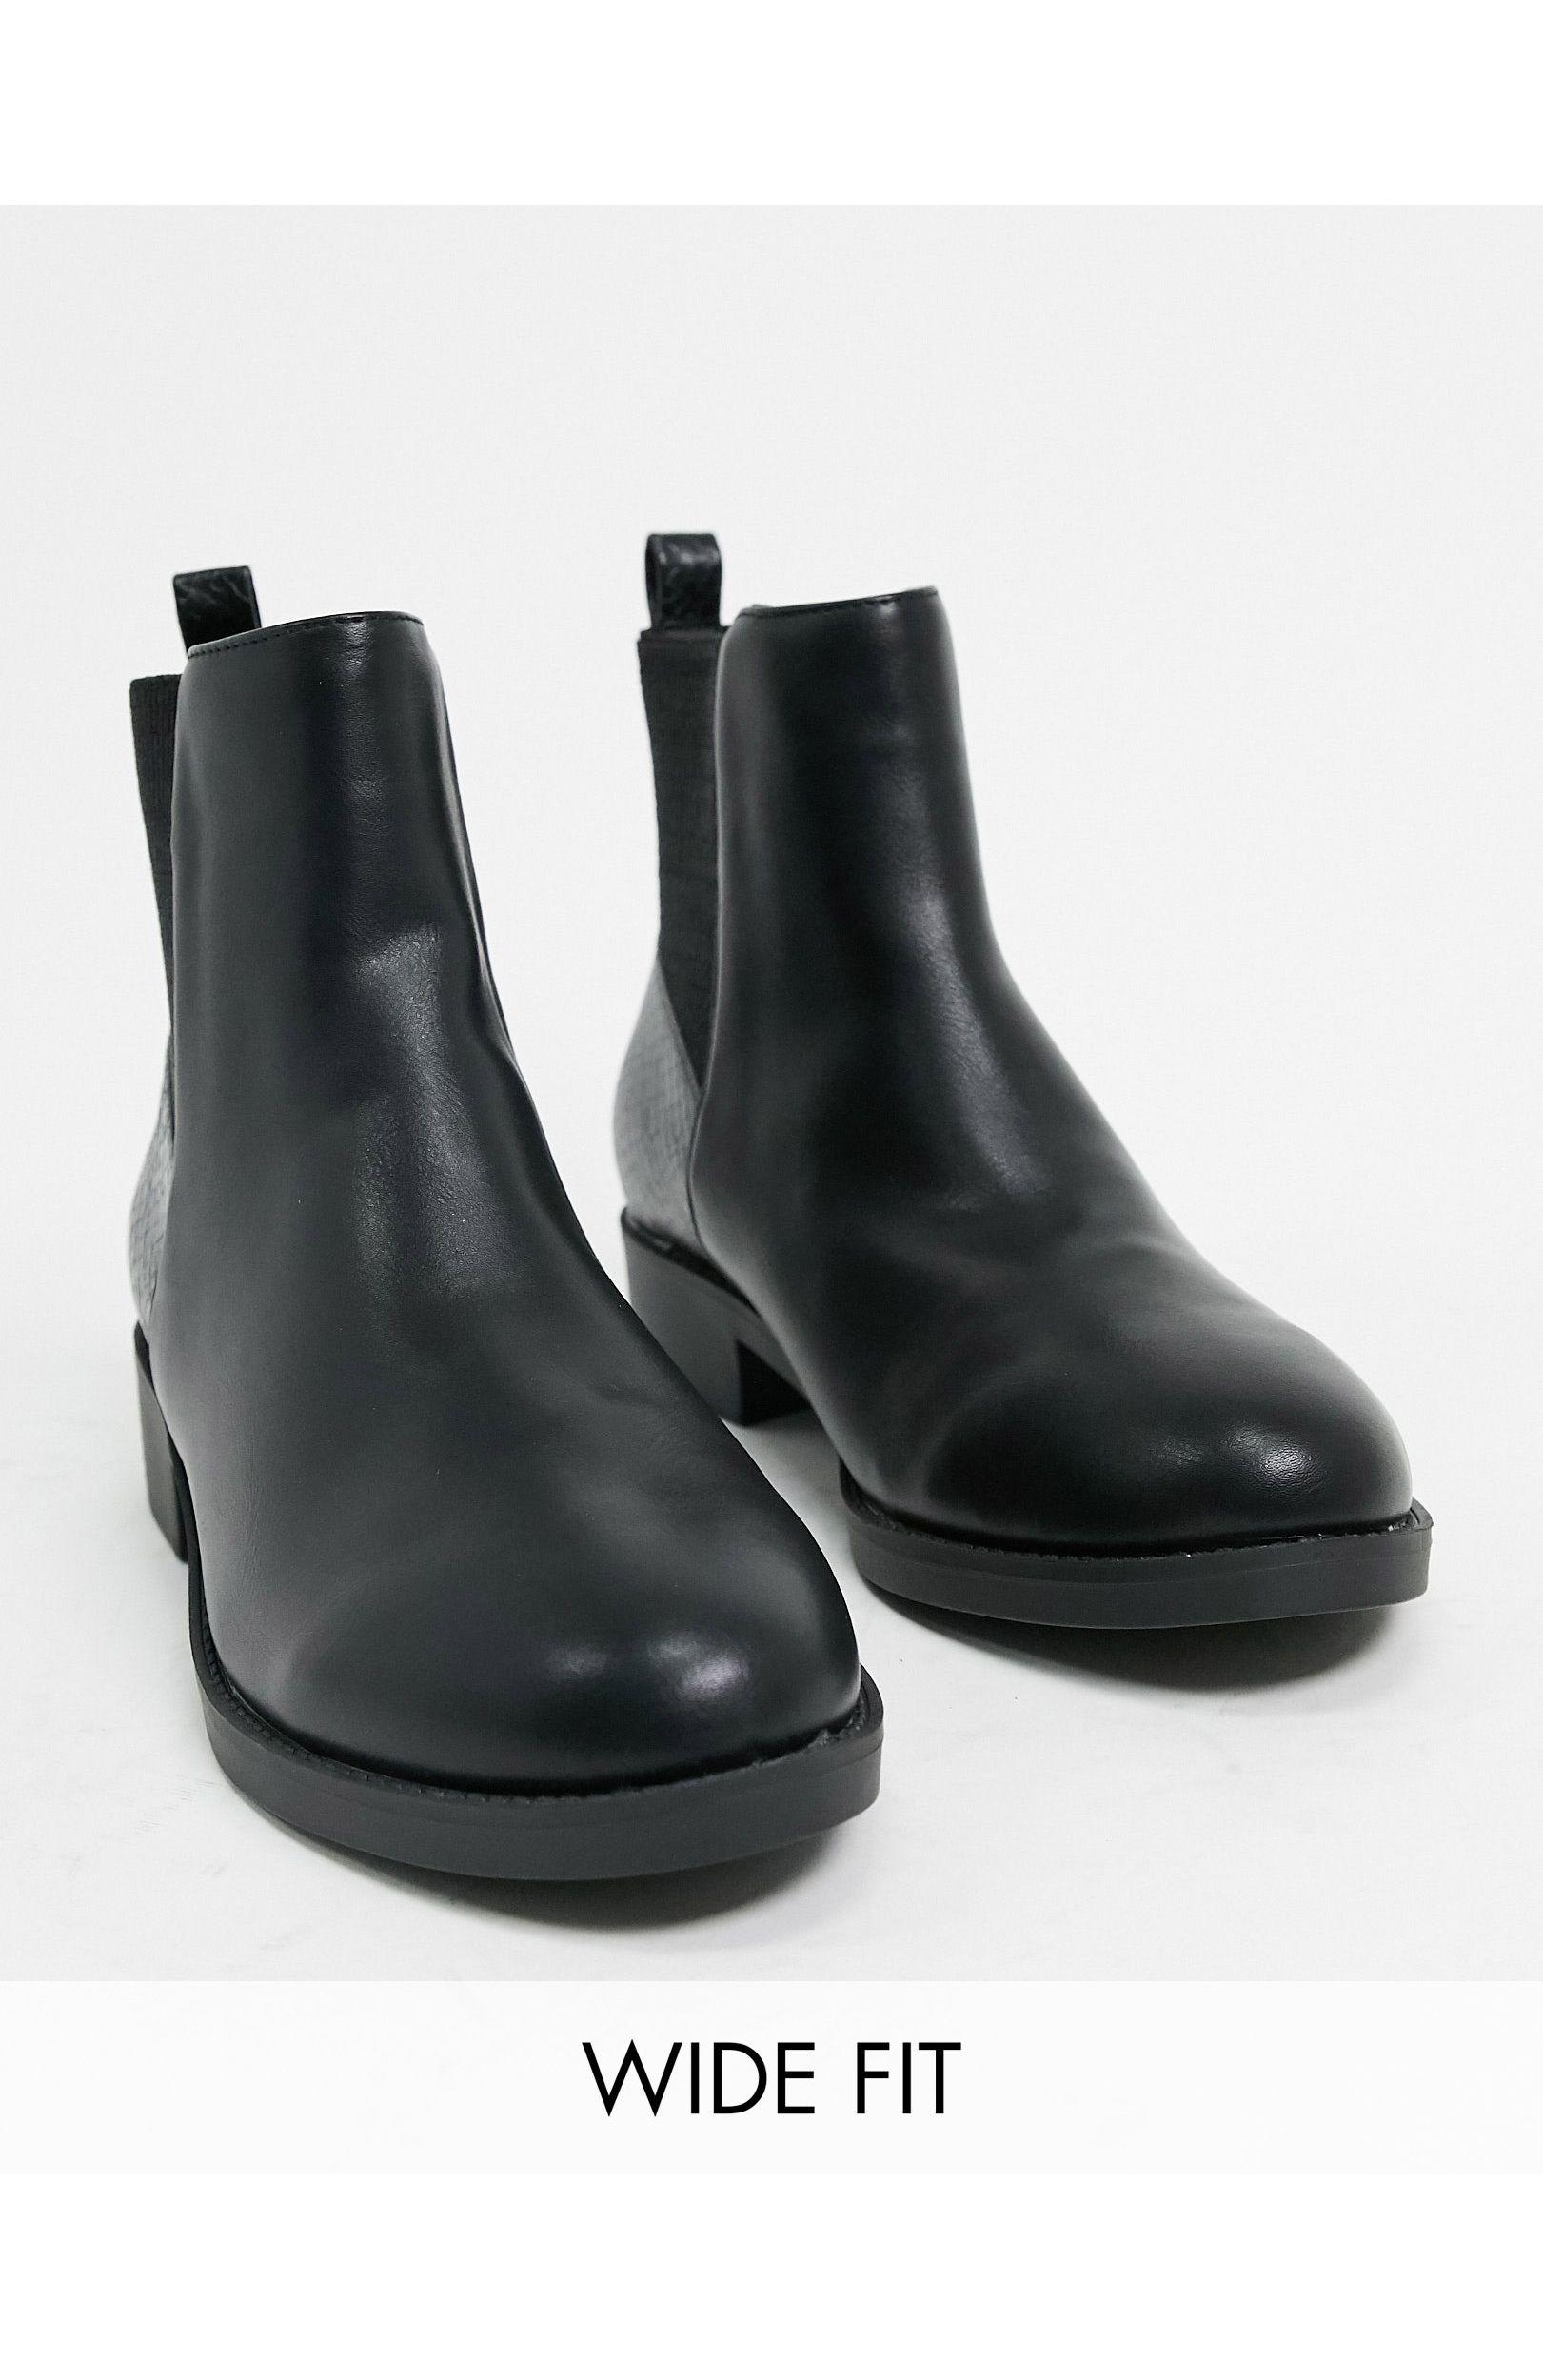 London Rebel Wide Fit Chelsea Boots in Black pu (Black) - Lyst